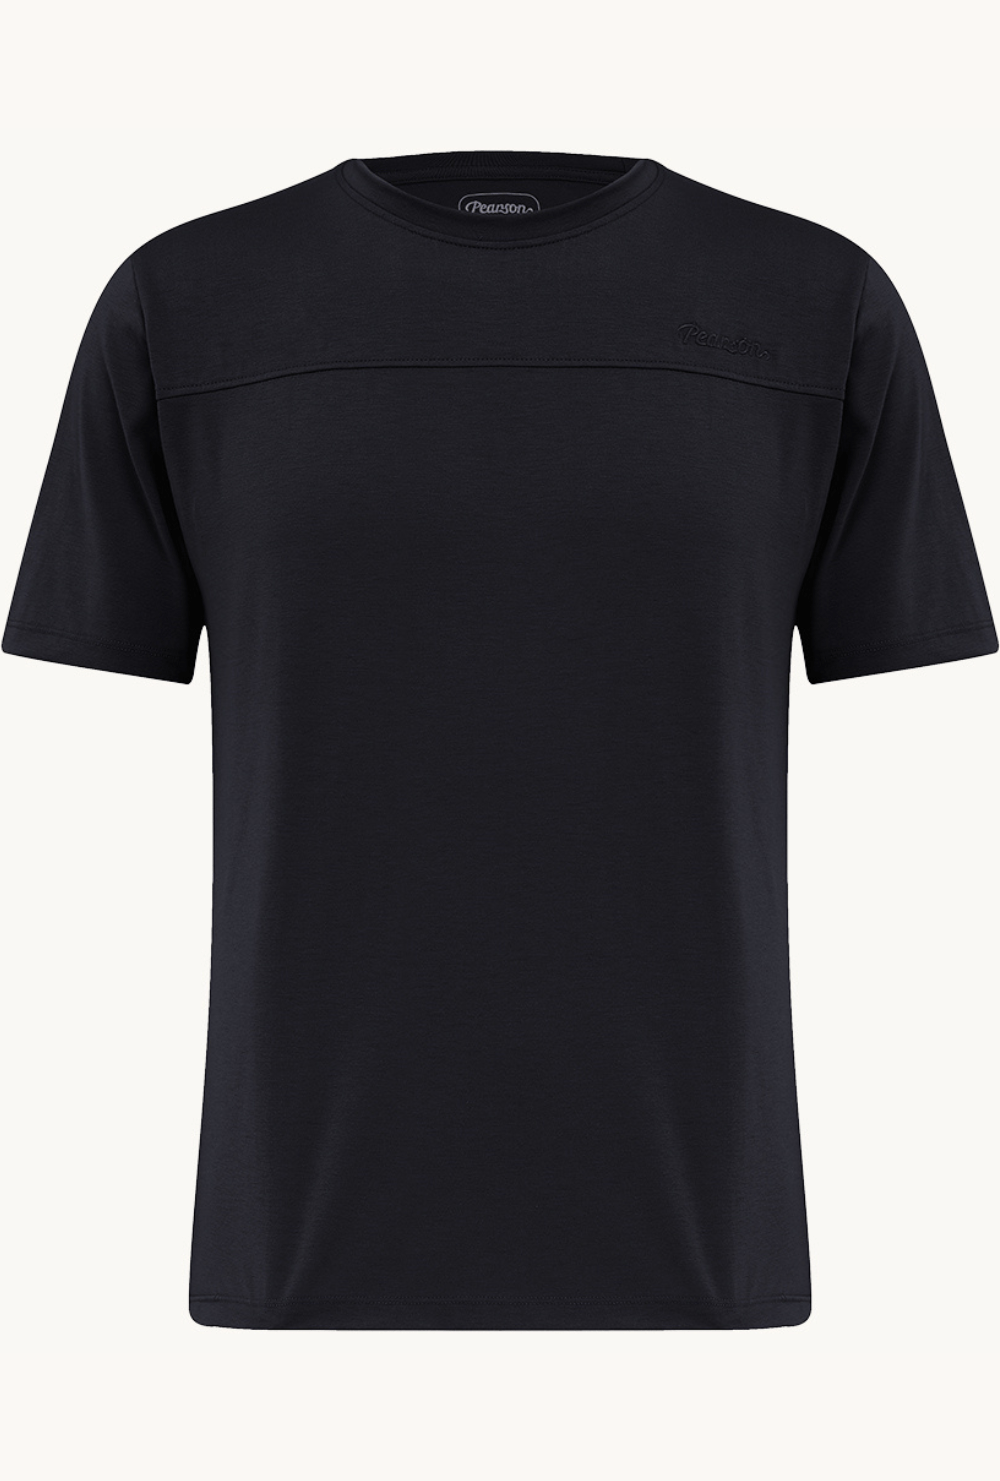 Pearson 1860  High DaysandHolidays - Cycling T-shirt  Black / Small